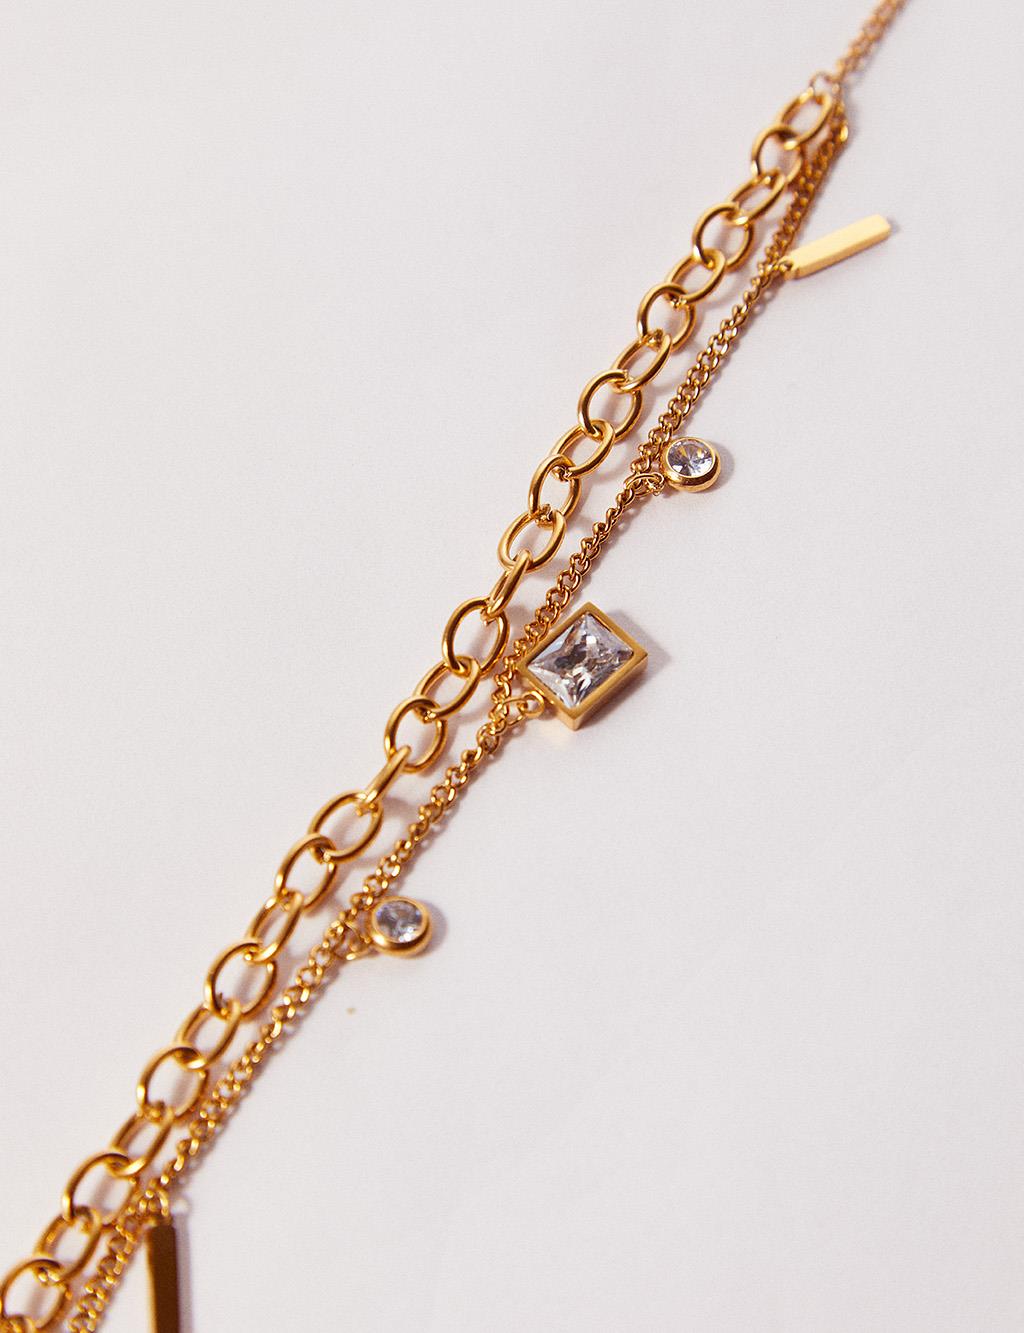 Stone Double Chain Steel Bracelet Gold Color